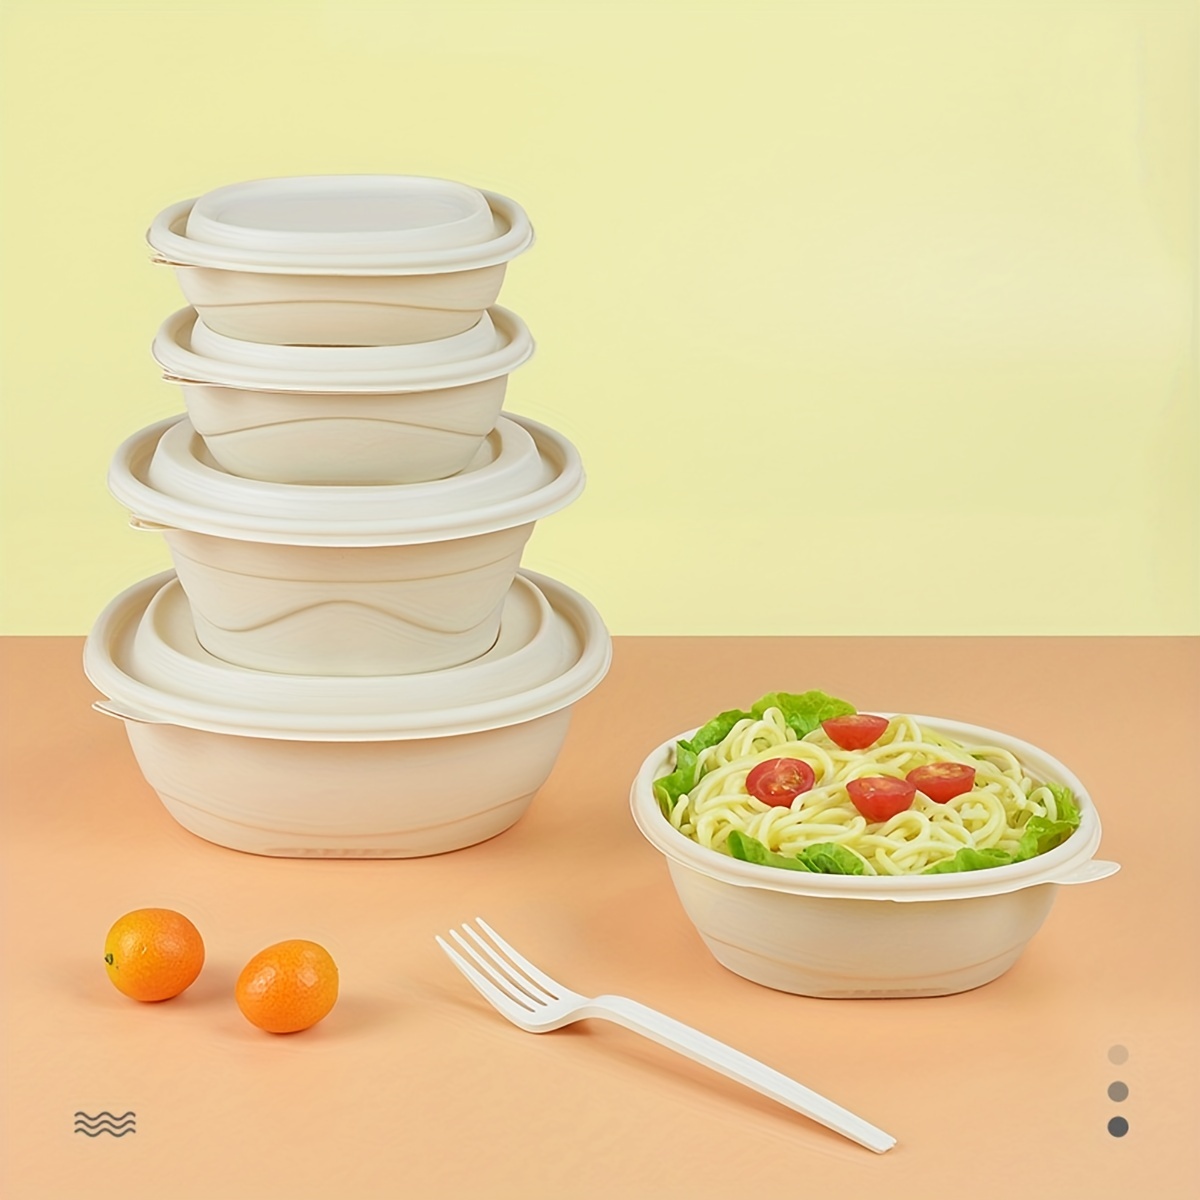 50 Set(100pcs) Meal Prep 24 oz Reusable Microwaveable Food